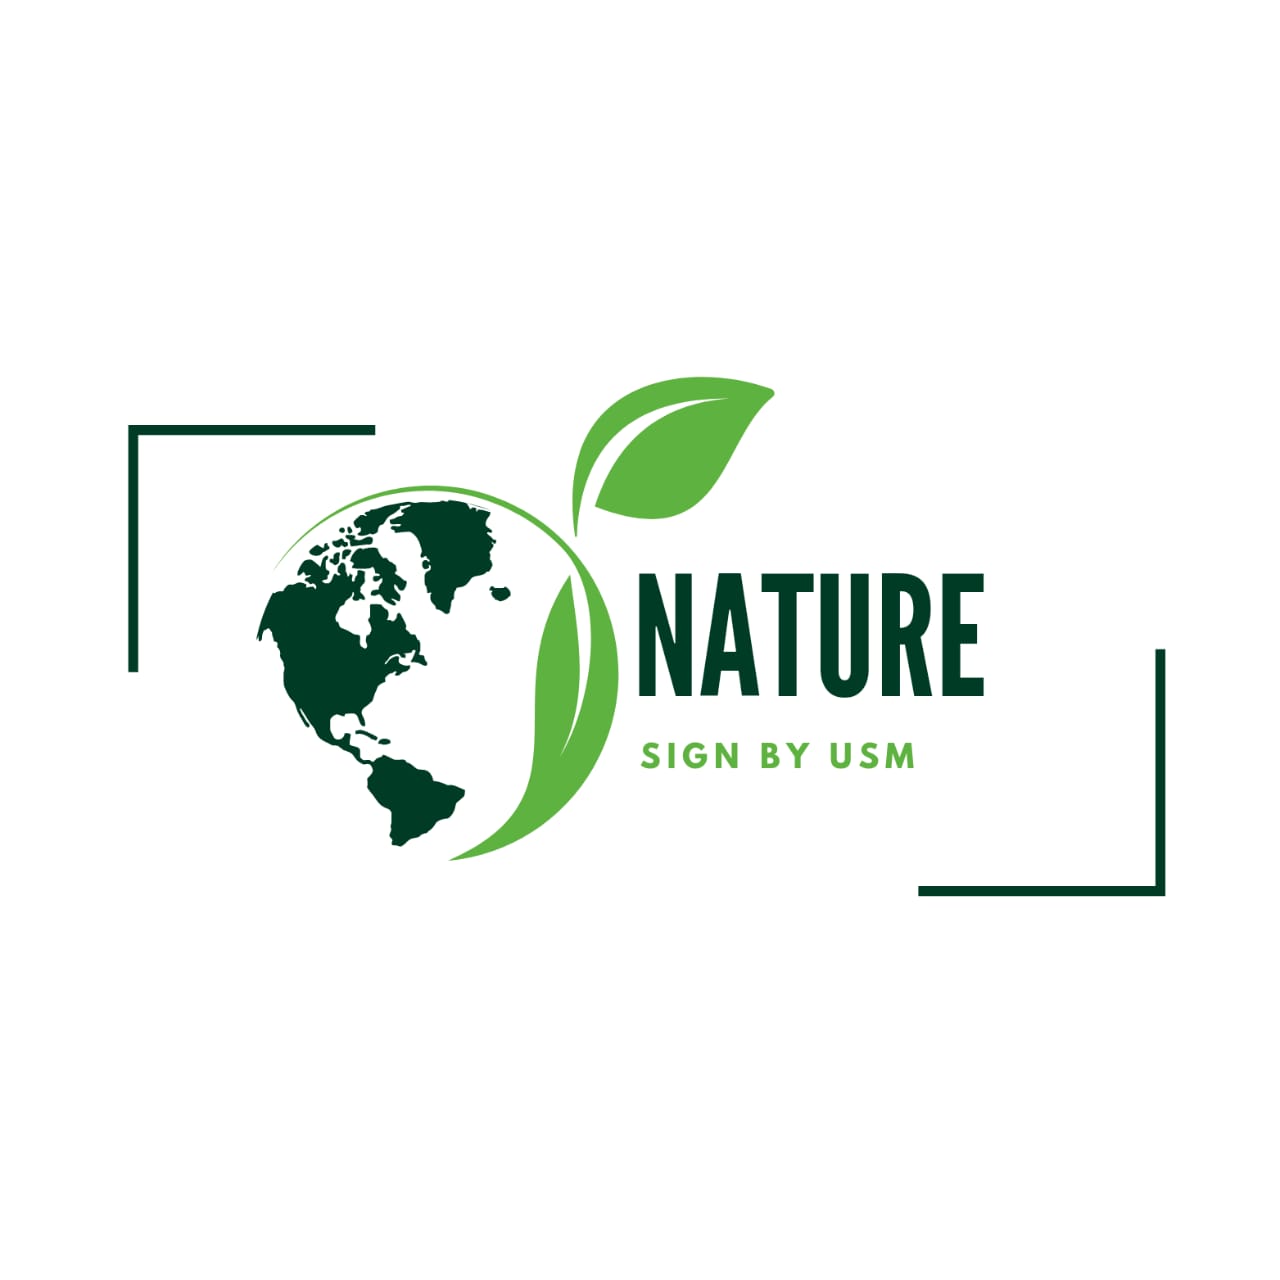 Perfect Design Nature Signature Logo By USM cover image.